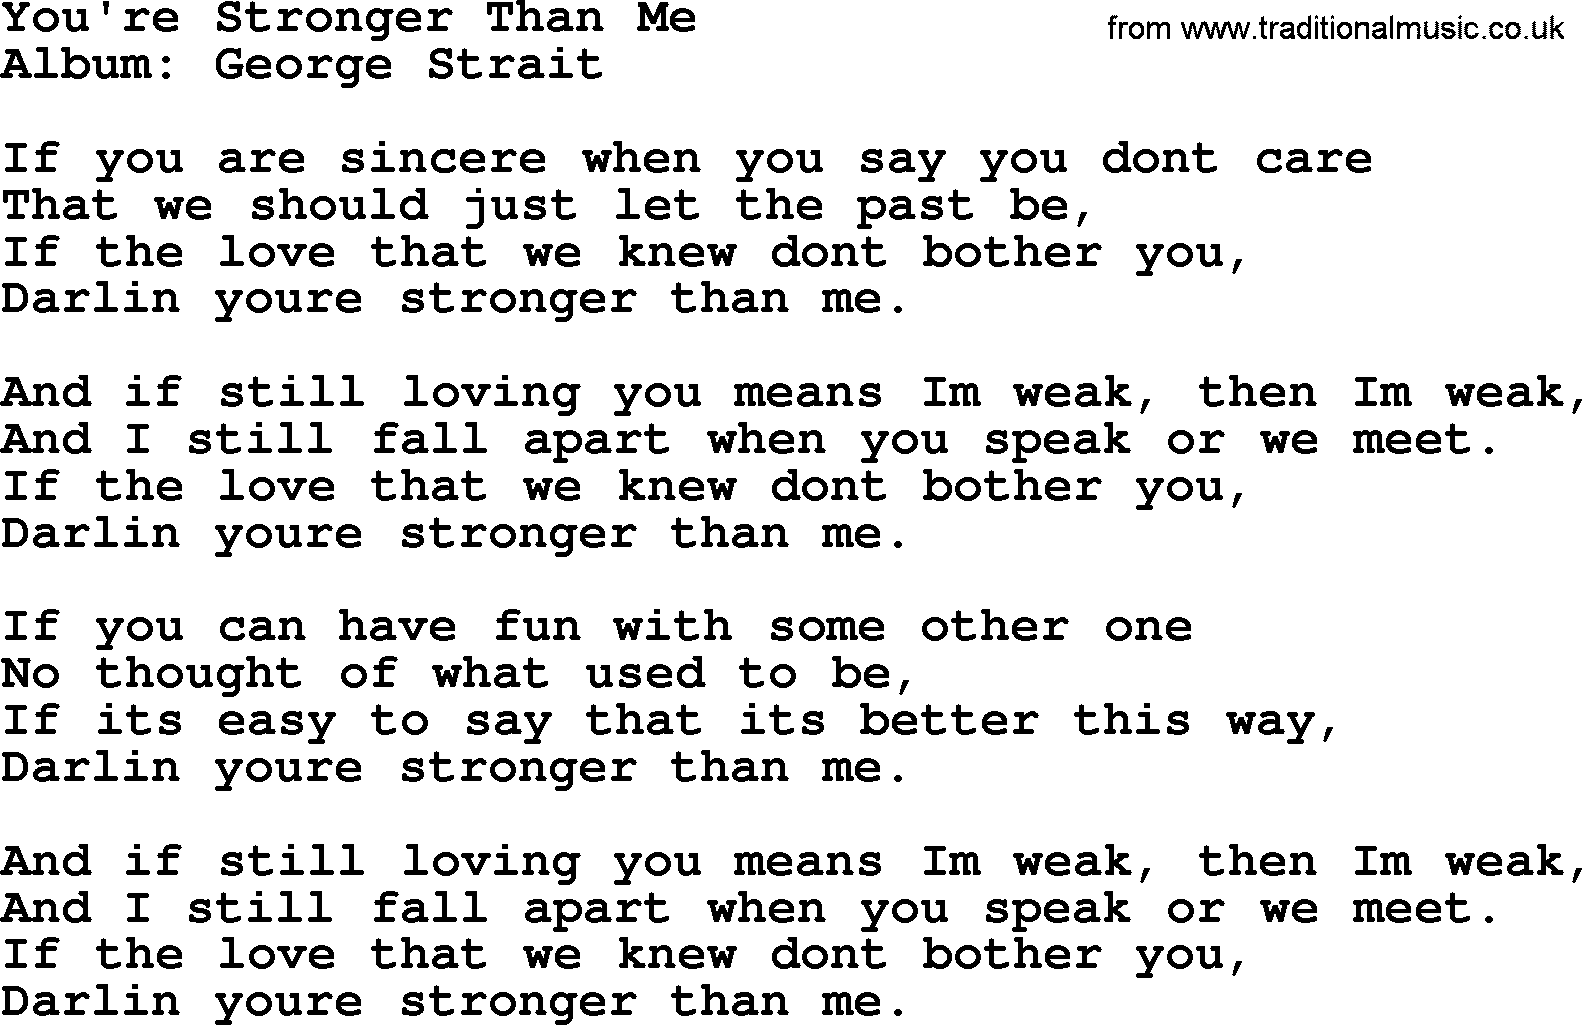 George Strait song: You're Stronger Than Me, lyrics